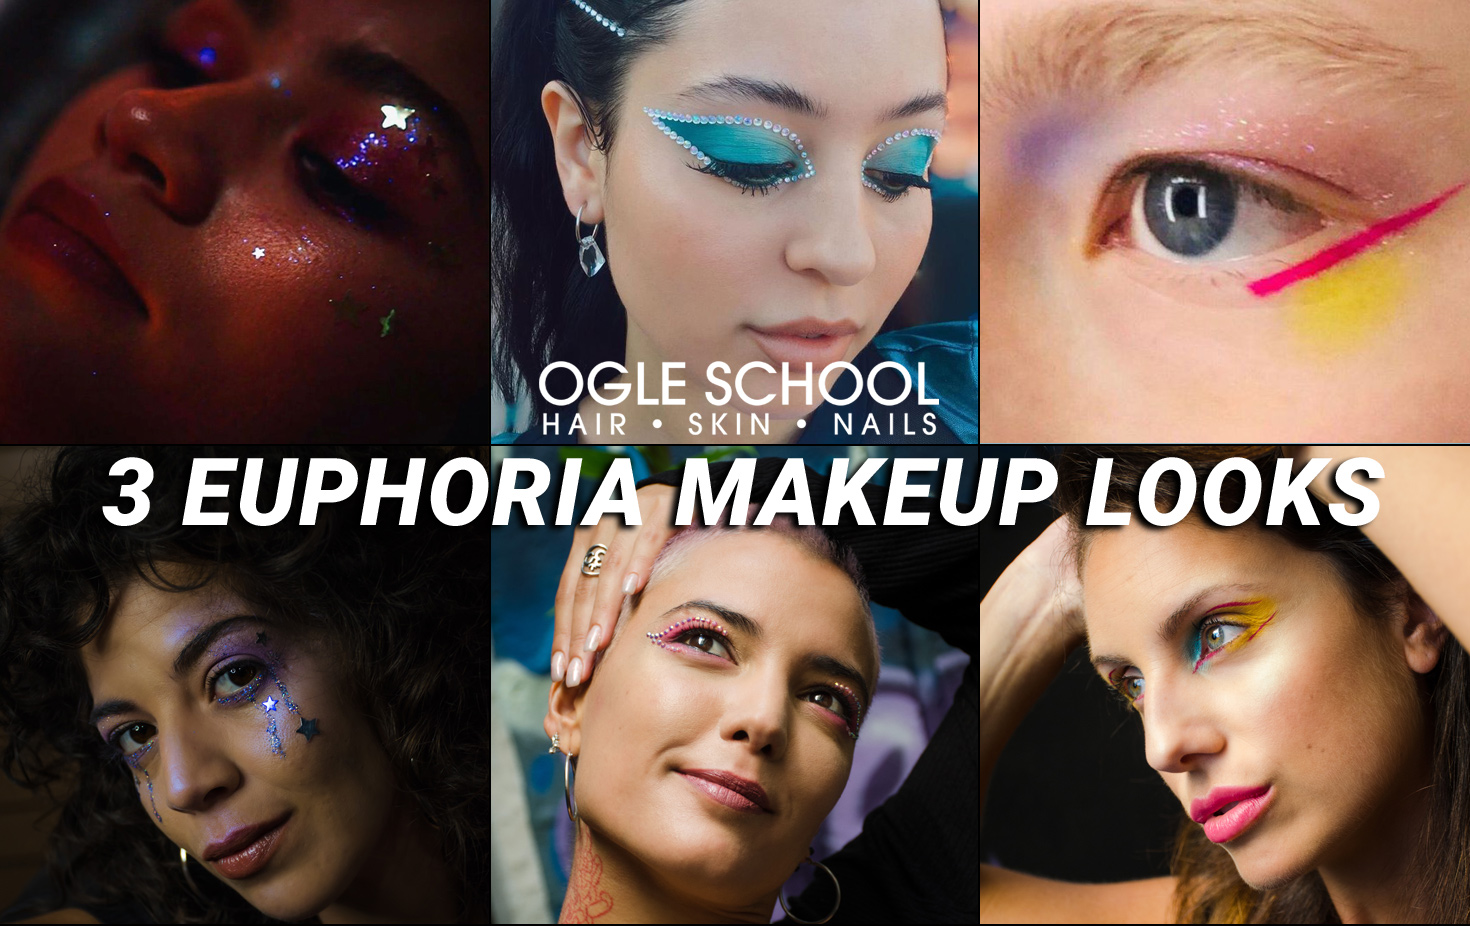 3 Euphoria Makeup Looks Recreated